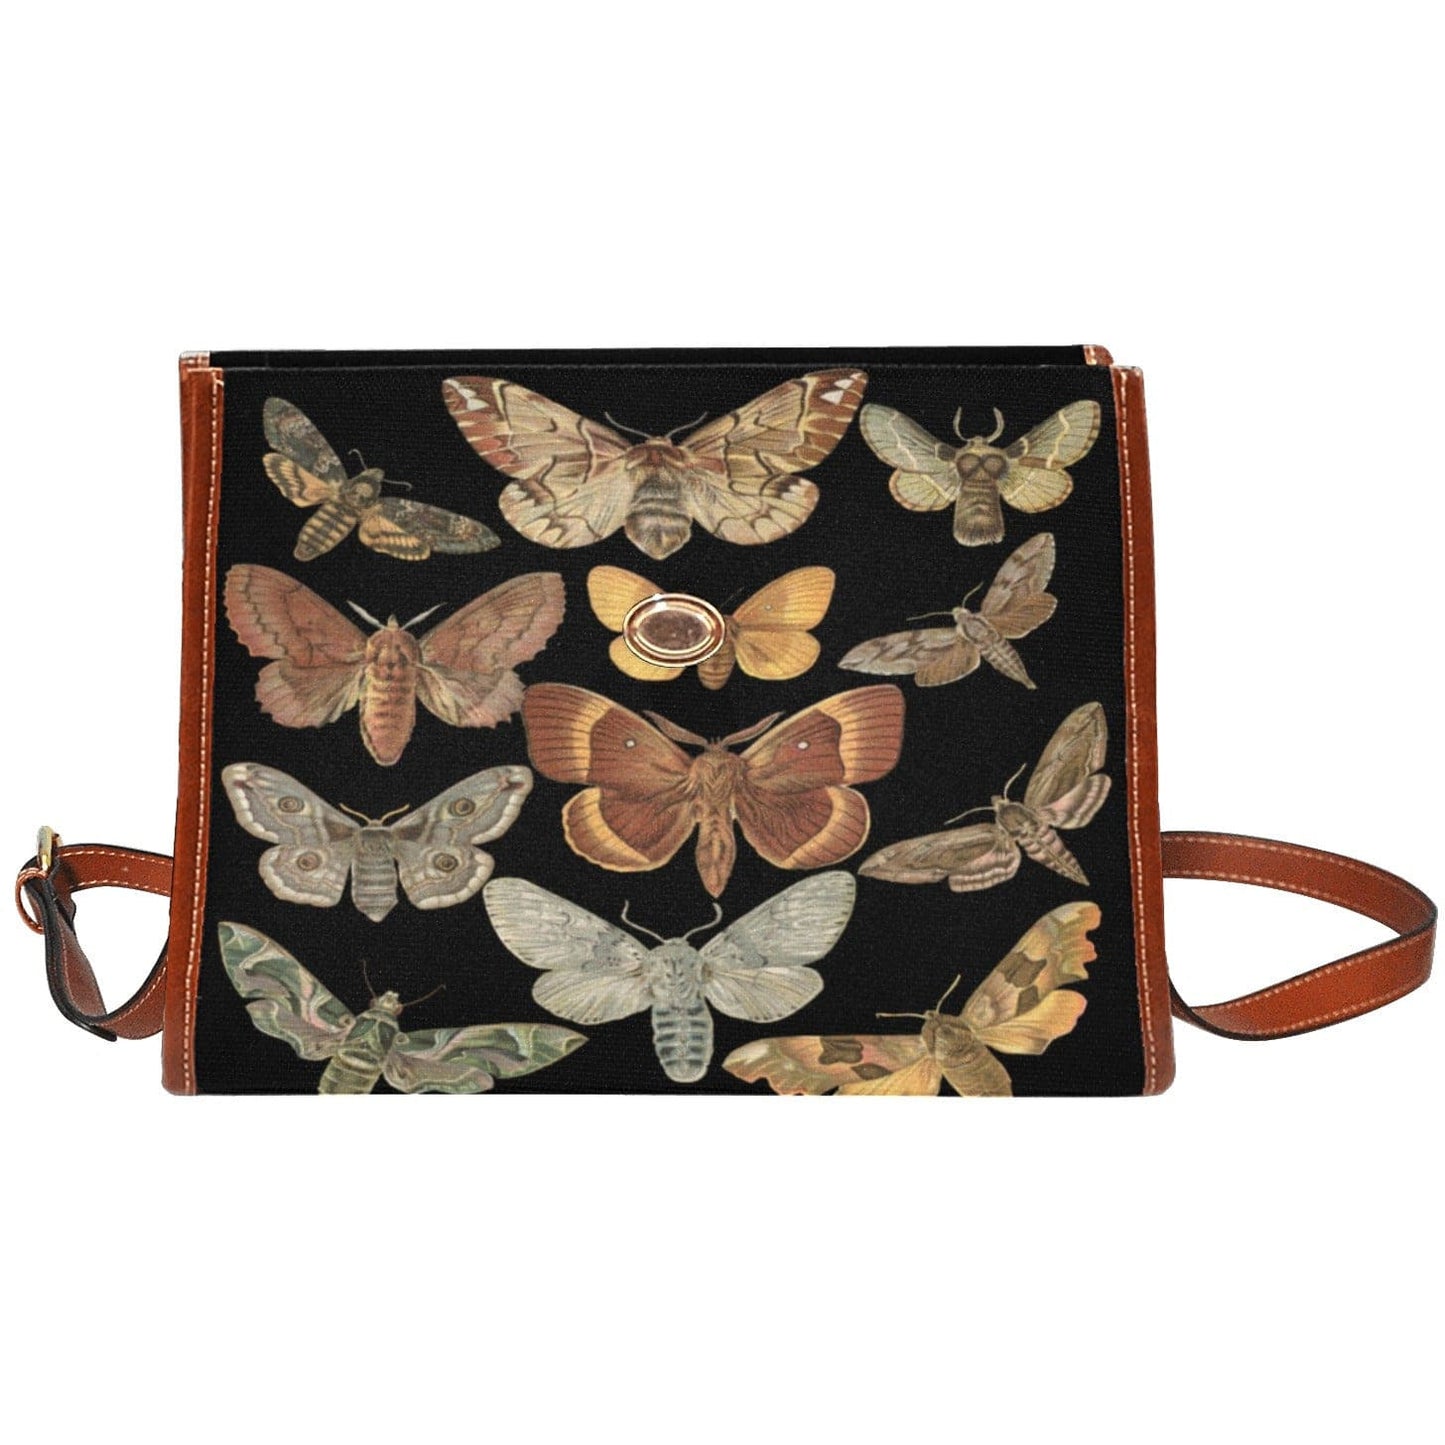 Moth Print Satchel Bag